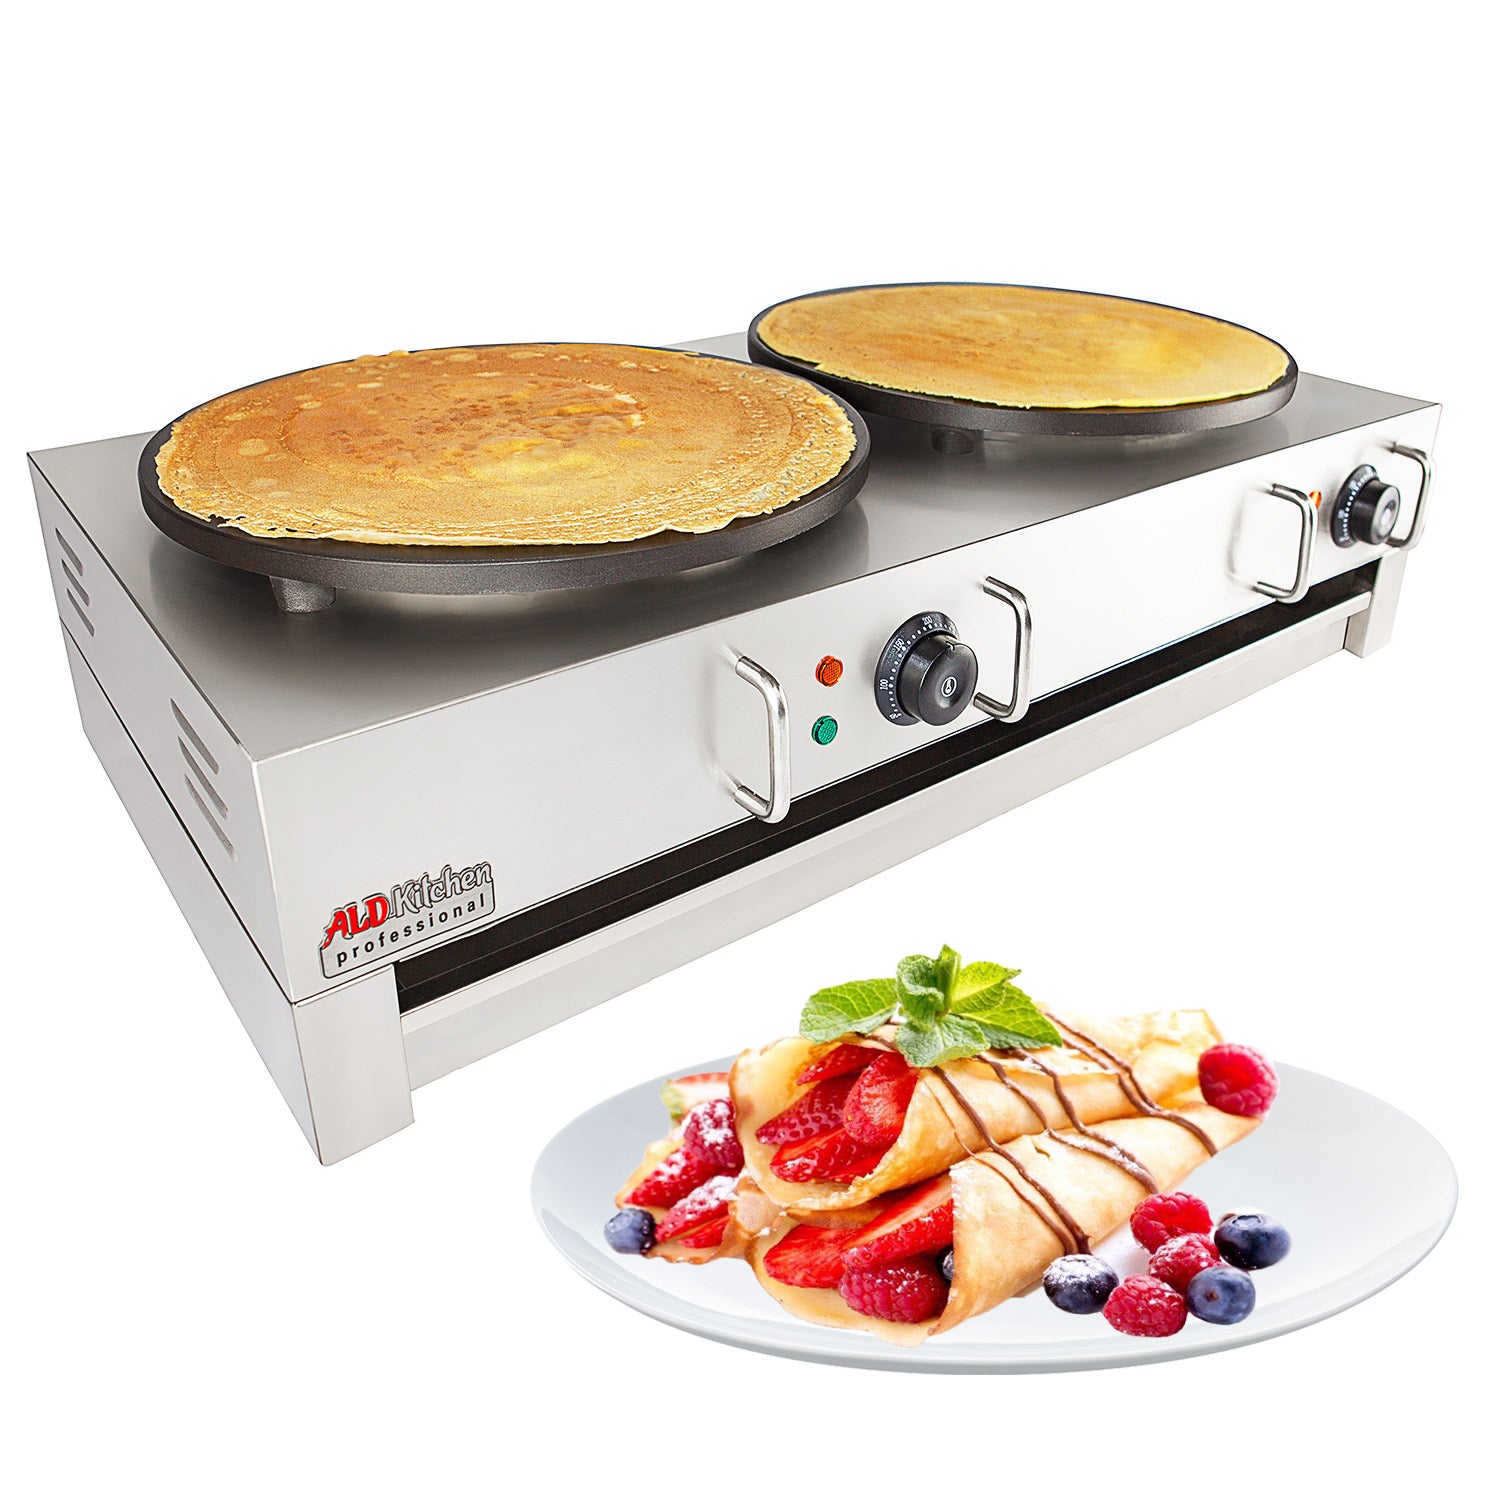 110V 1550W Commercial Electric Crepes Maker Nonstick Pan & Uniform Heat Electric Crepe Maker Pancake Machine 220mm 